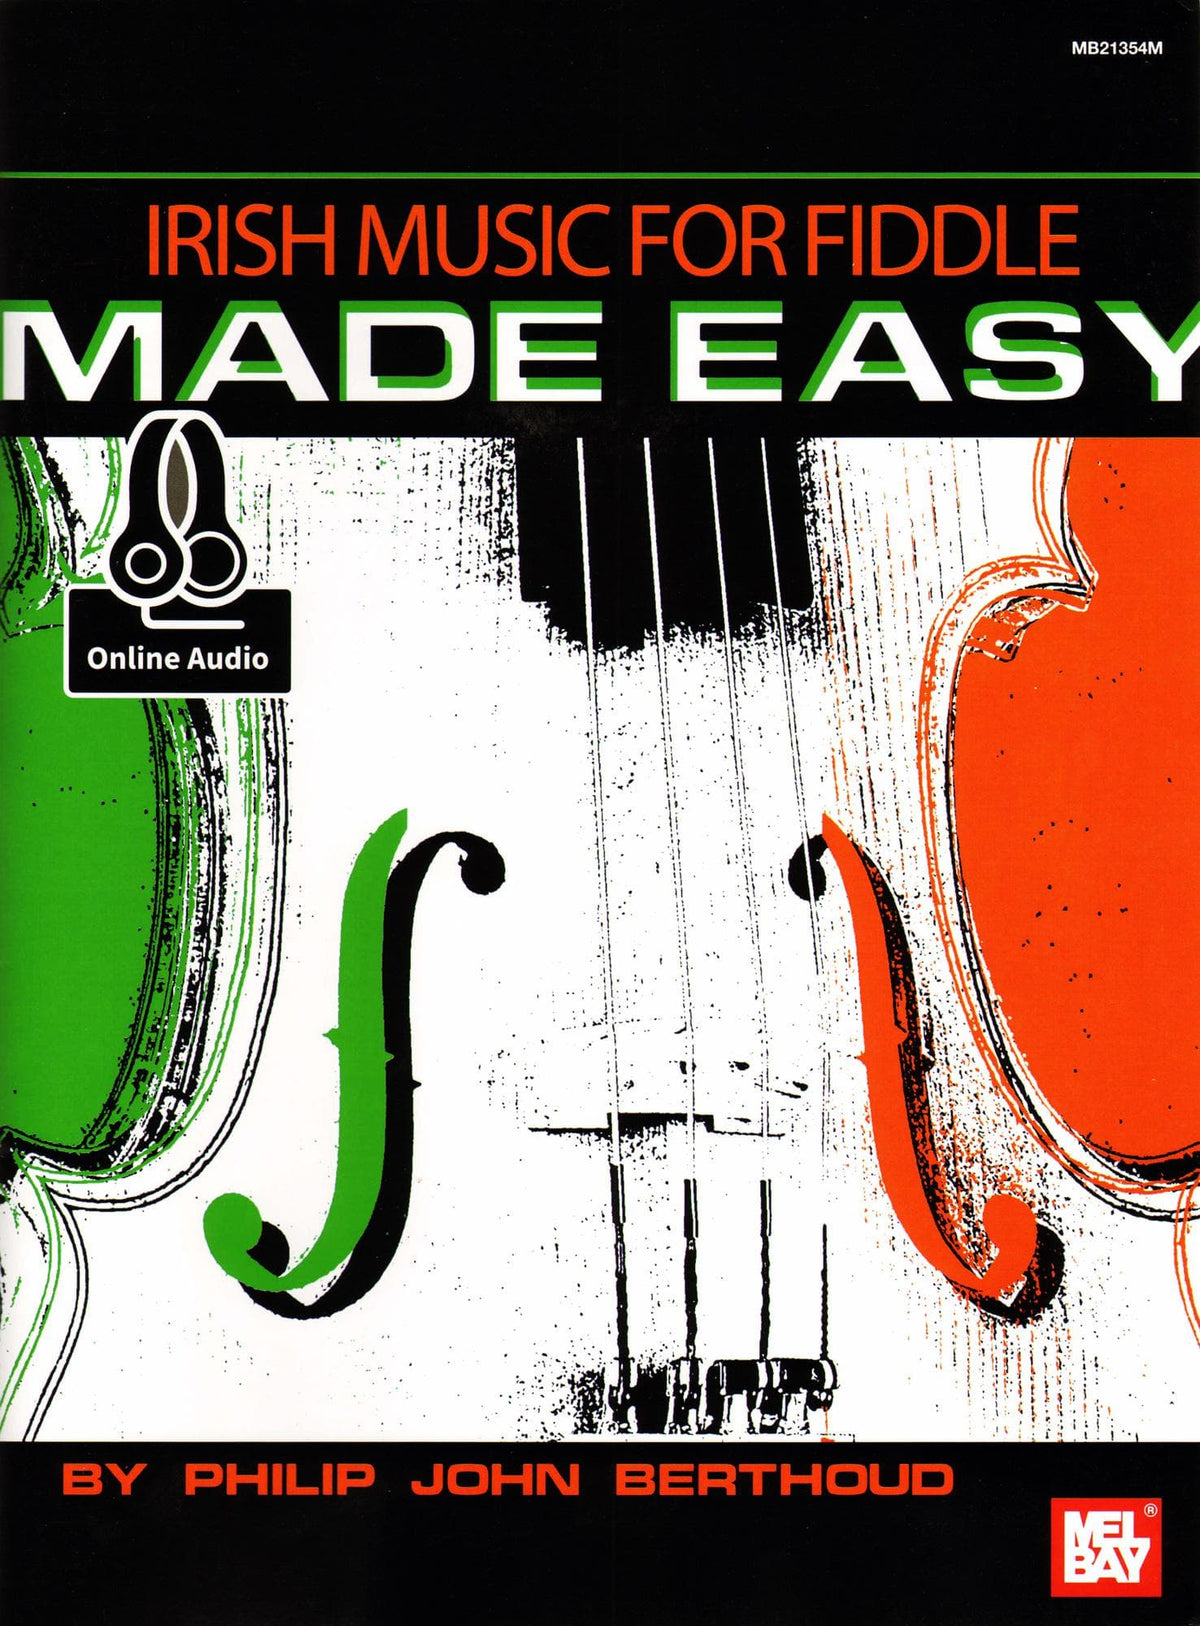 Berthoud, Philip John - Irish Music for Fiddle Made Easy - Violin solo - Book/Online Audio - Mel Bay Publications